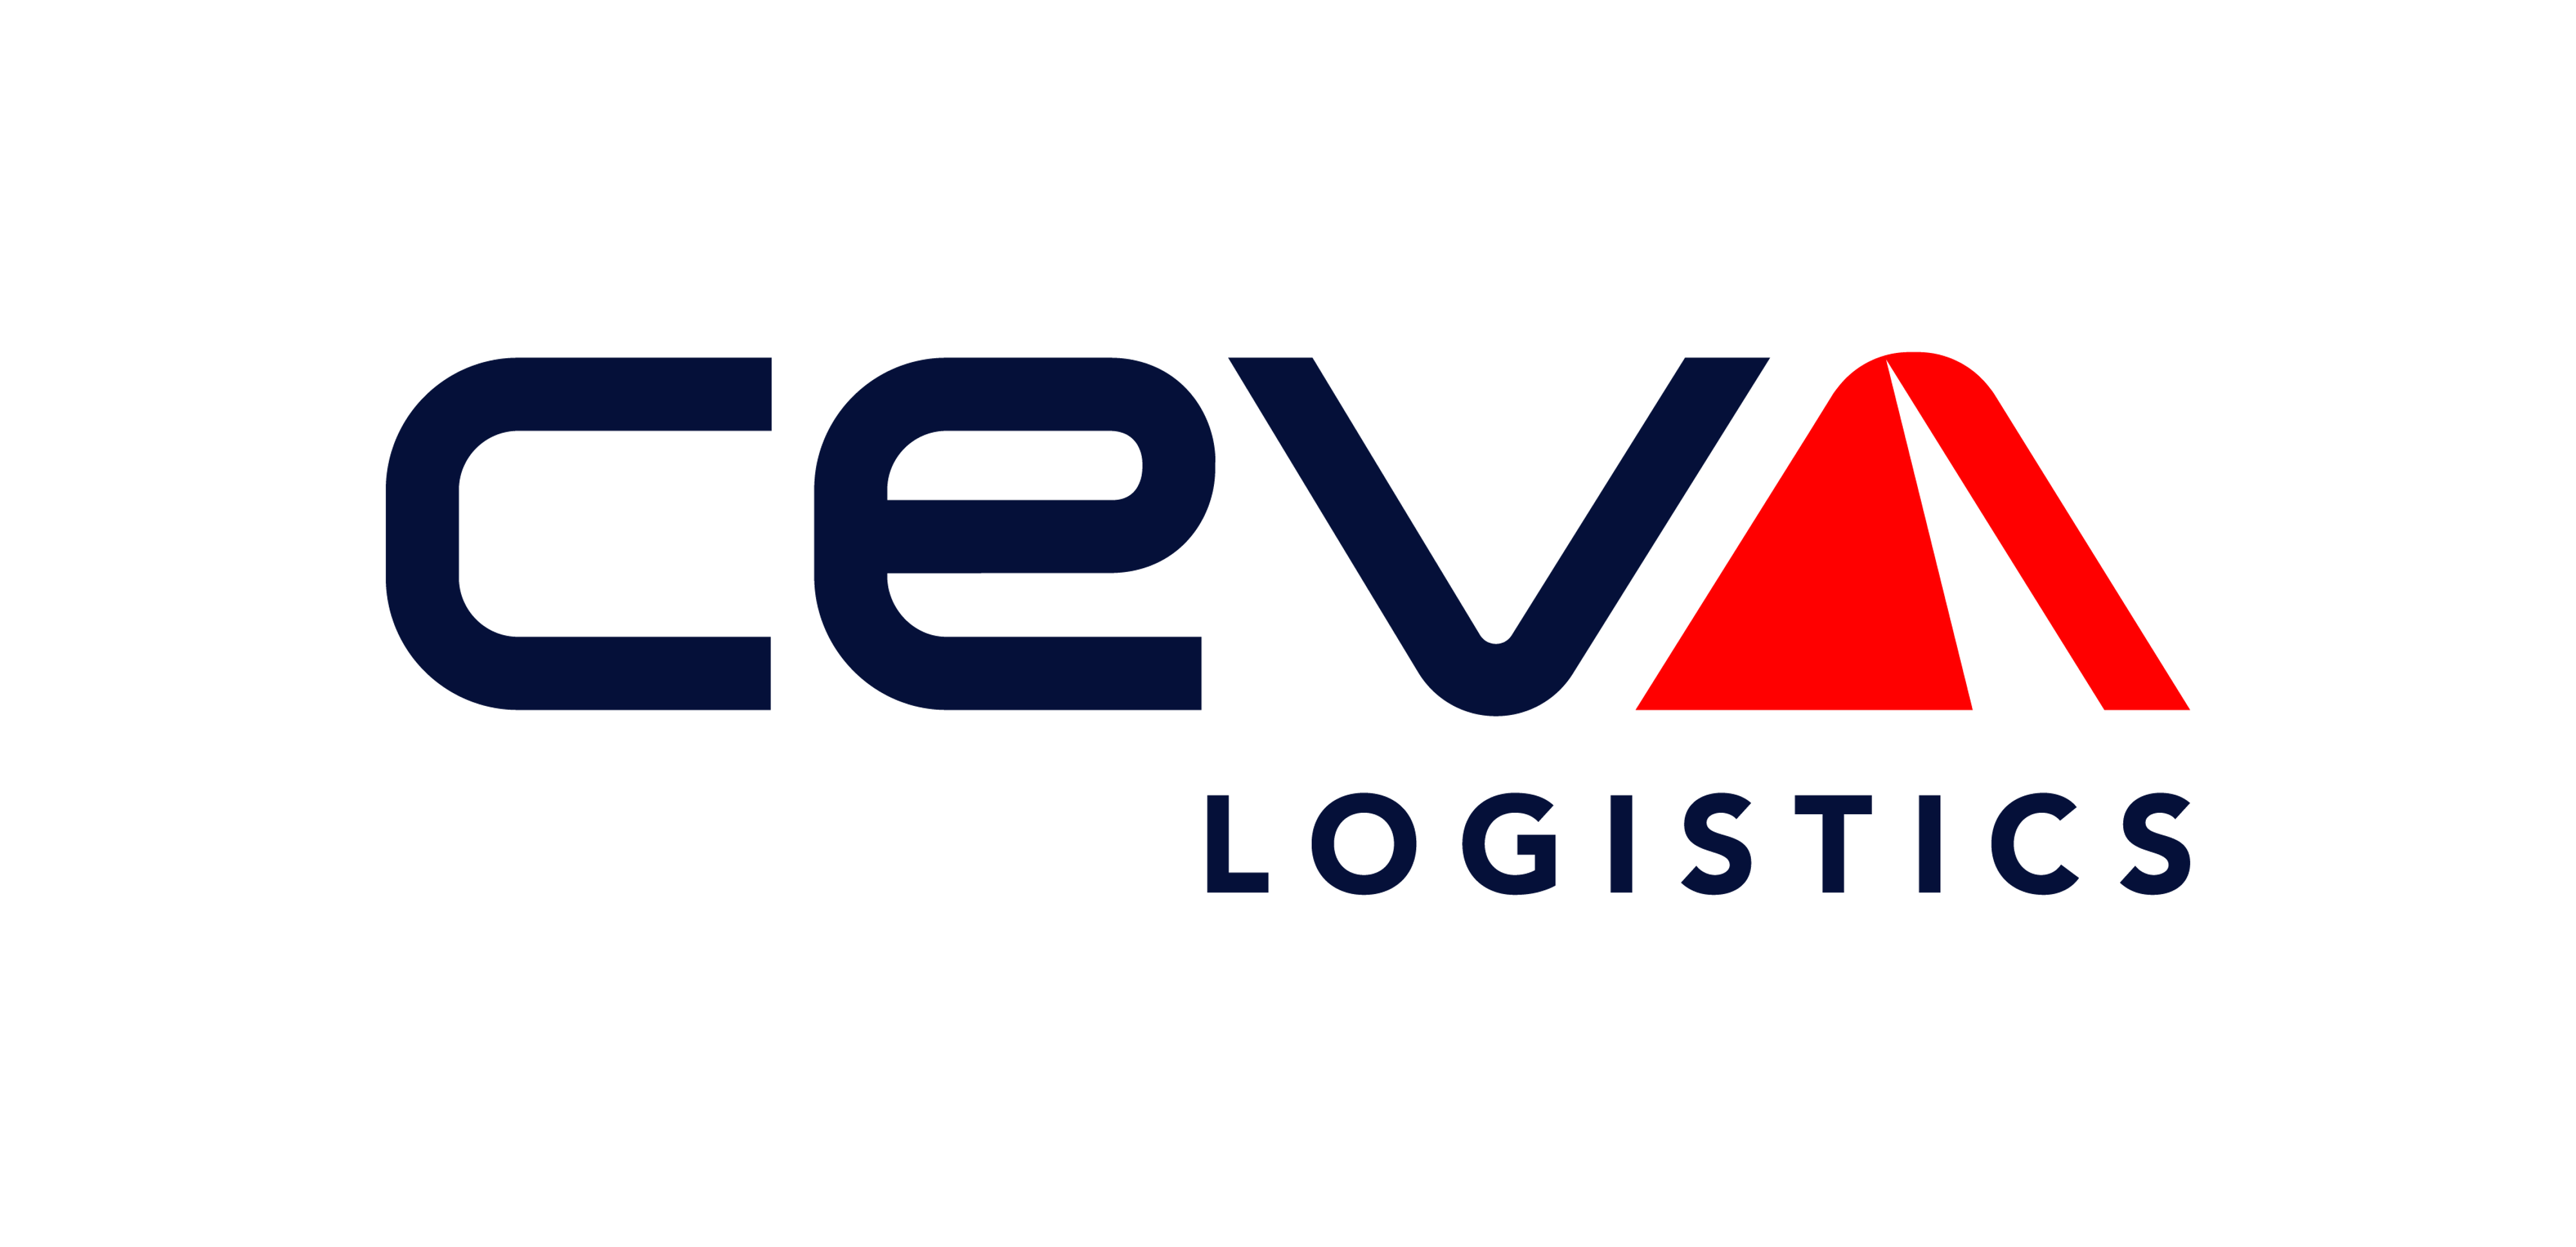 Ceva Logistics Ltd